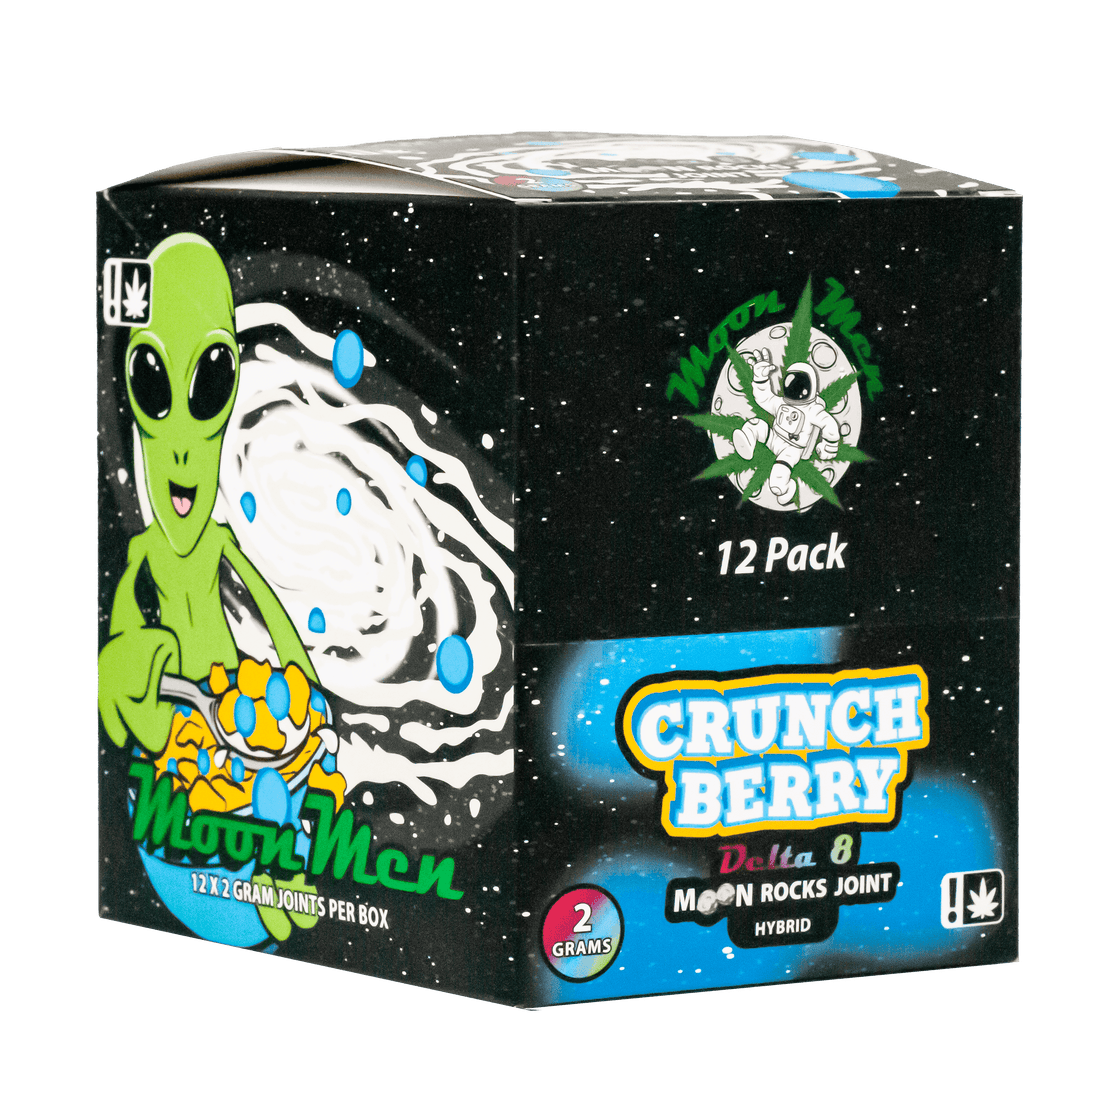 Delta 8 Moon Rock Joint Crunch Berry Hybrid (2g) | Moon Men